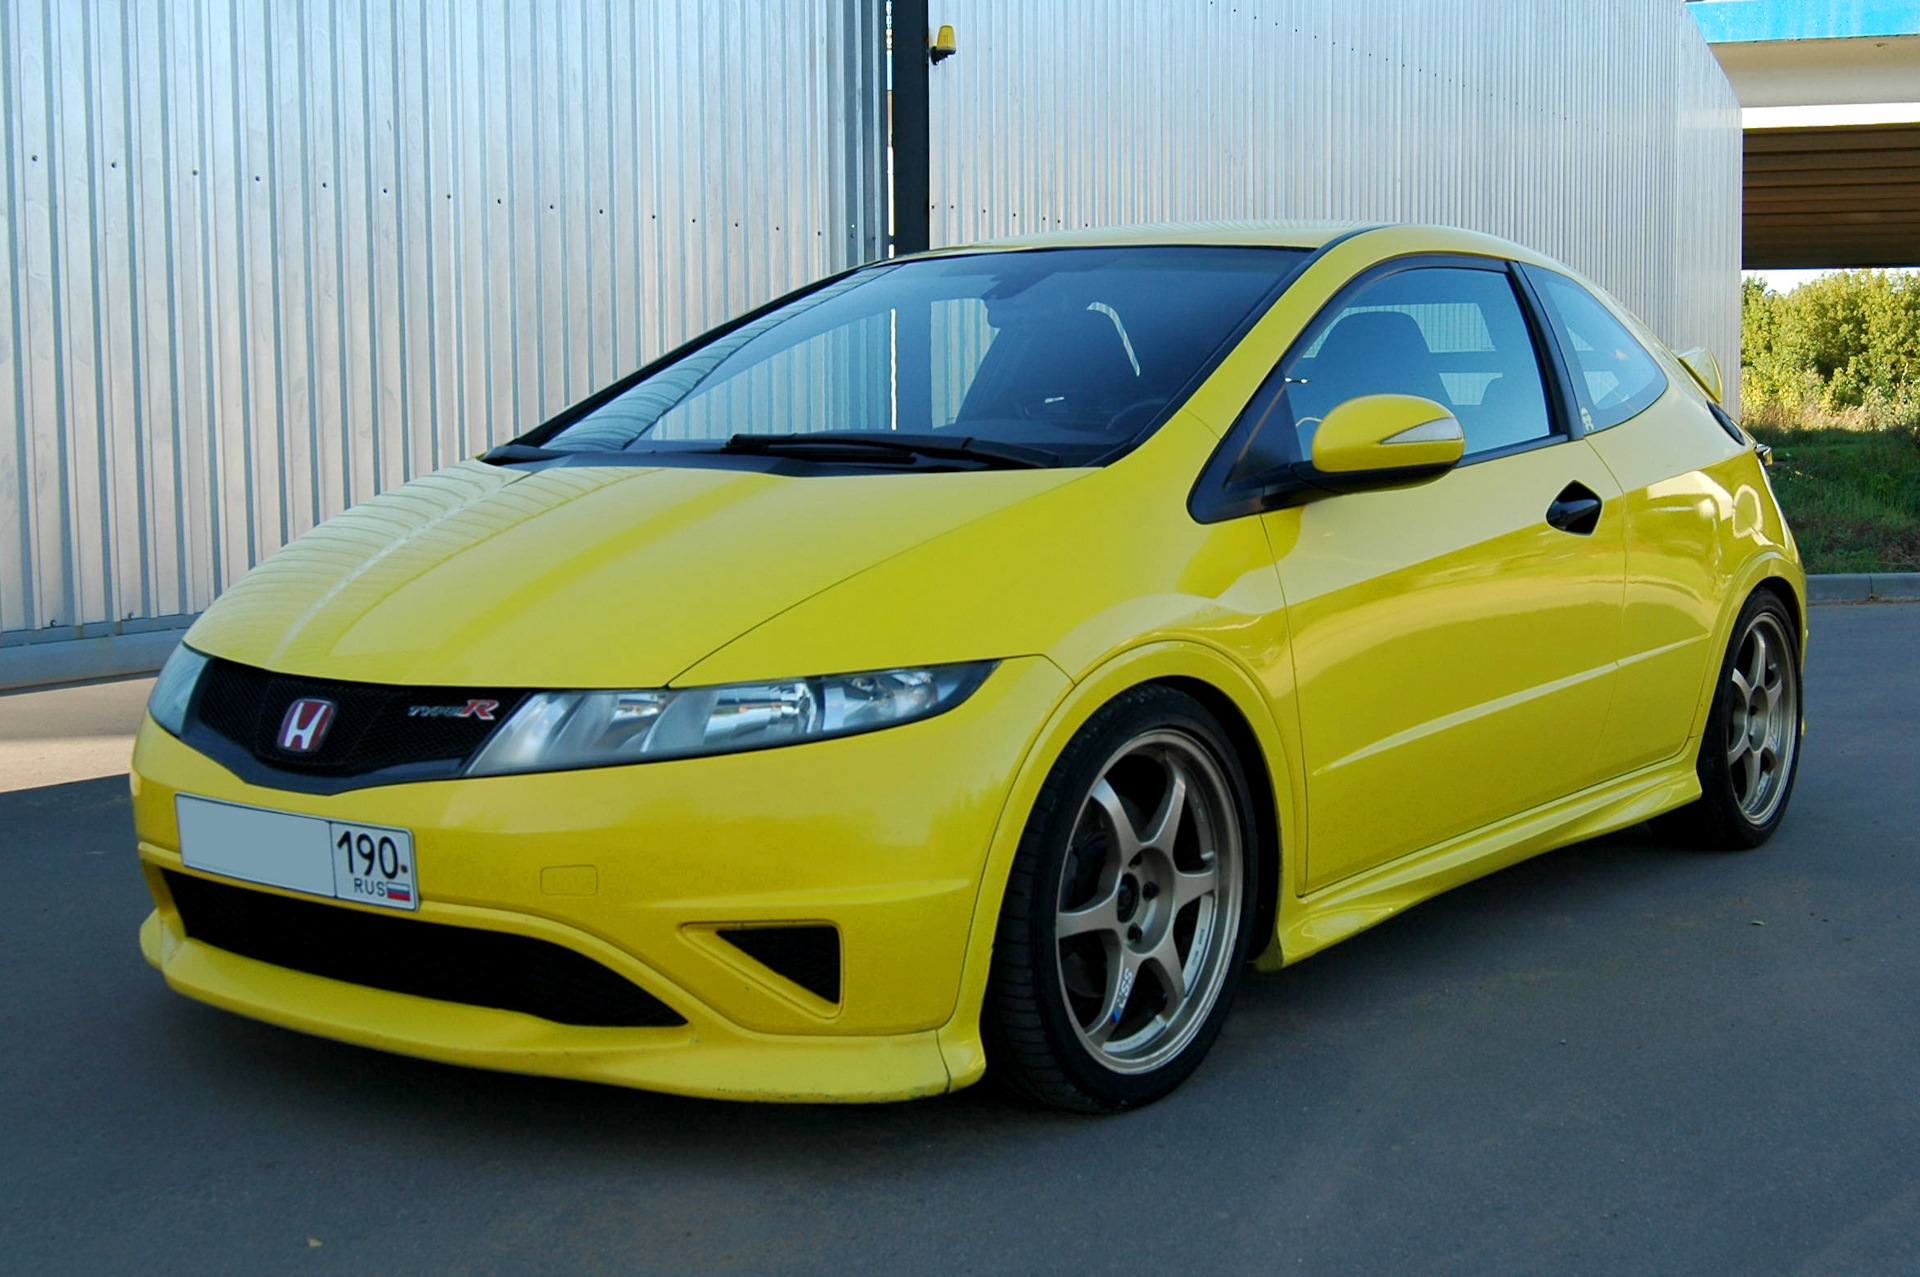 Honda желтая. Цивик тайп р 2008. Honda Civic 3d Type r 2008. Honda Civic Type r 2008. Honda Civic 8 r Yellow.